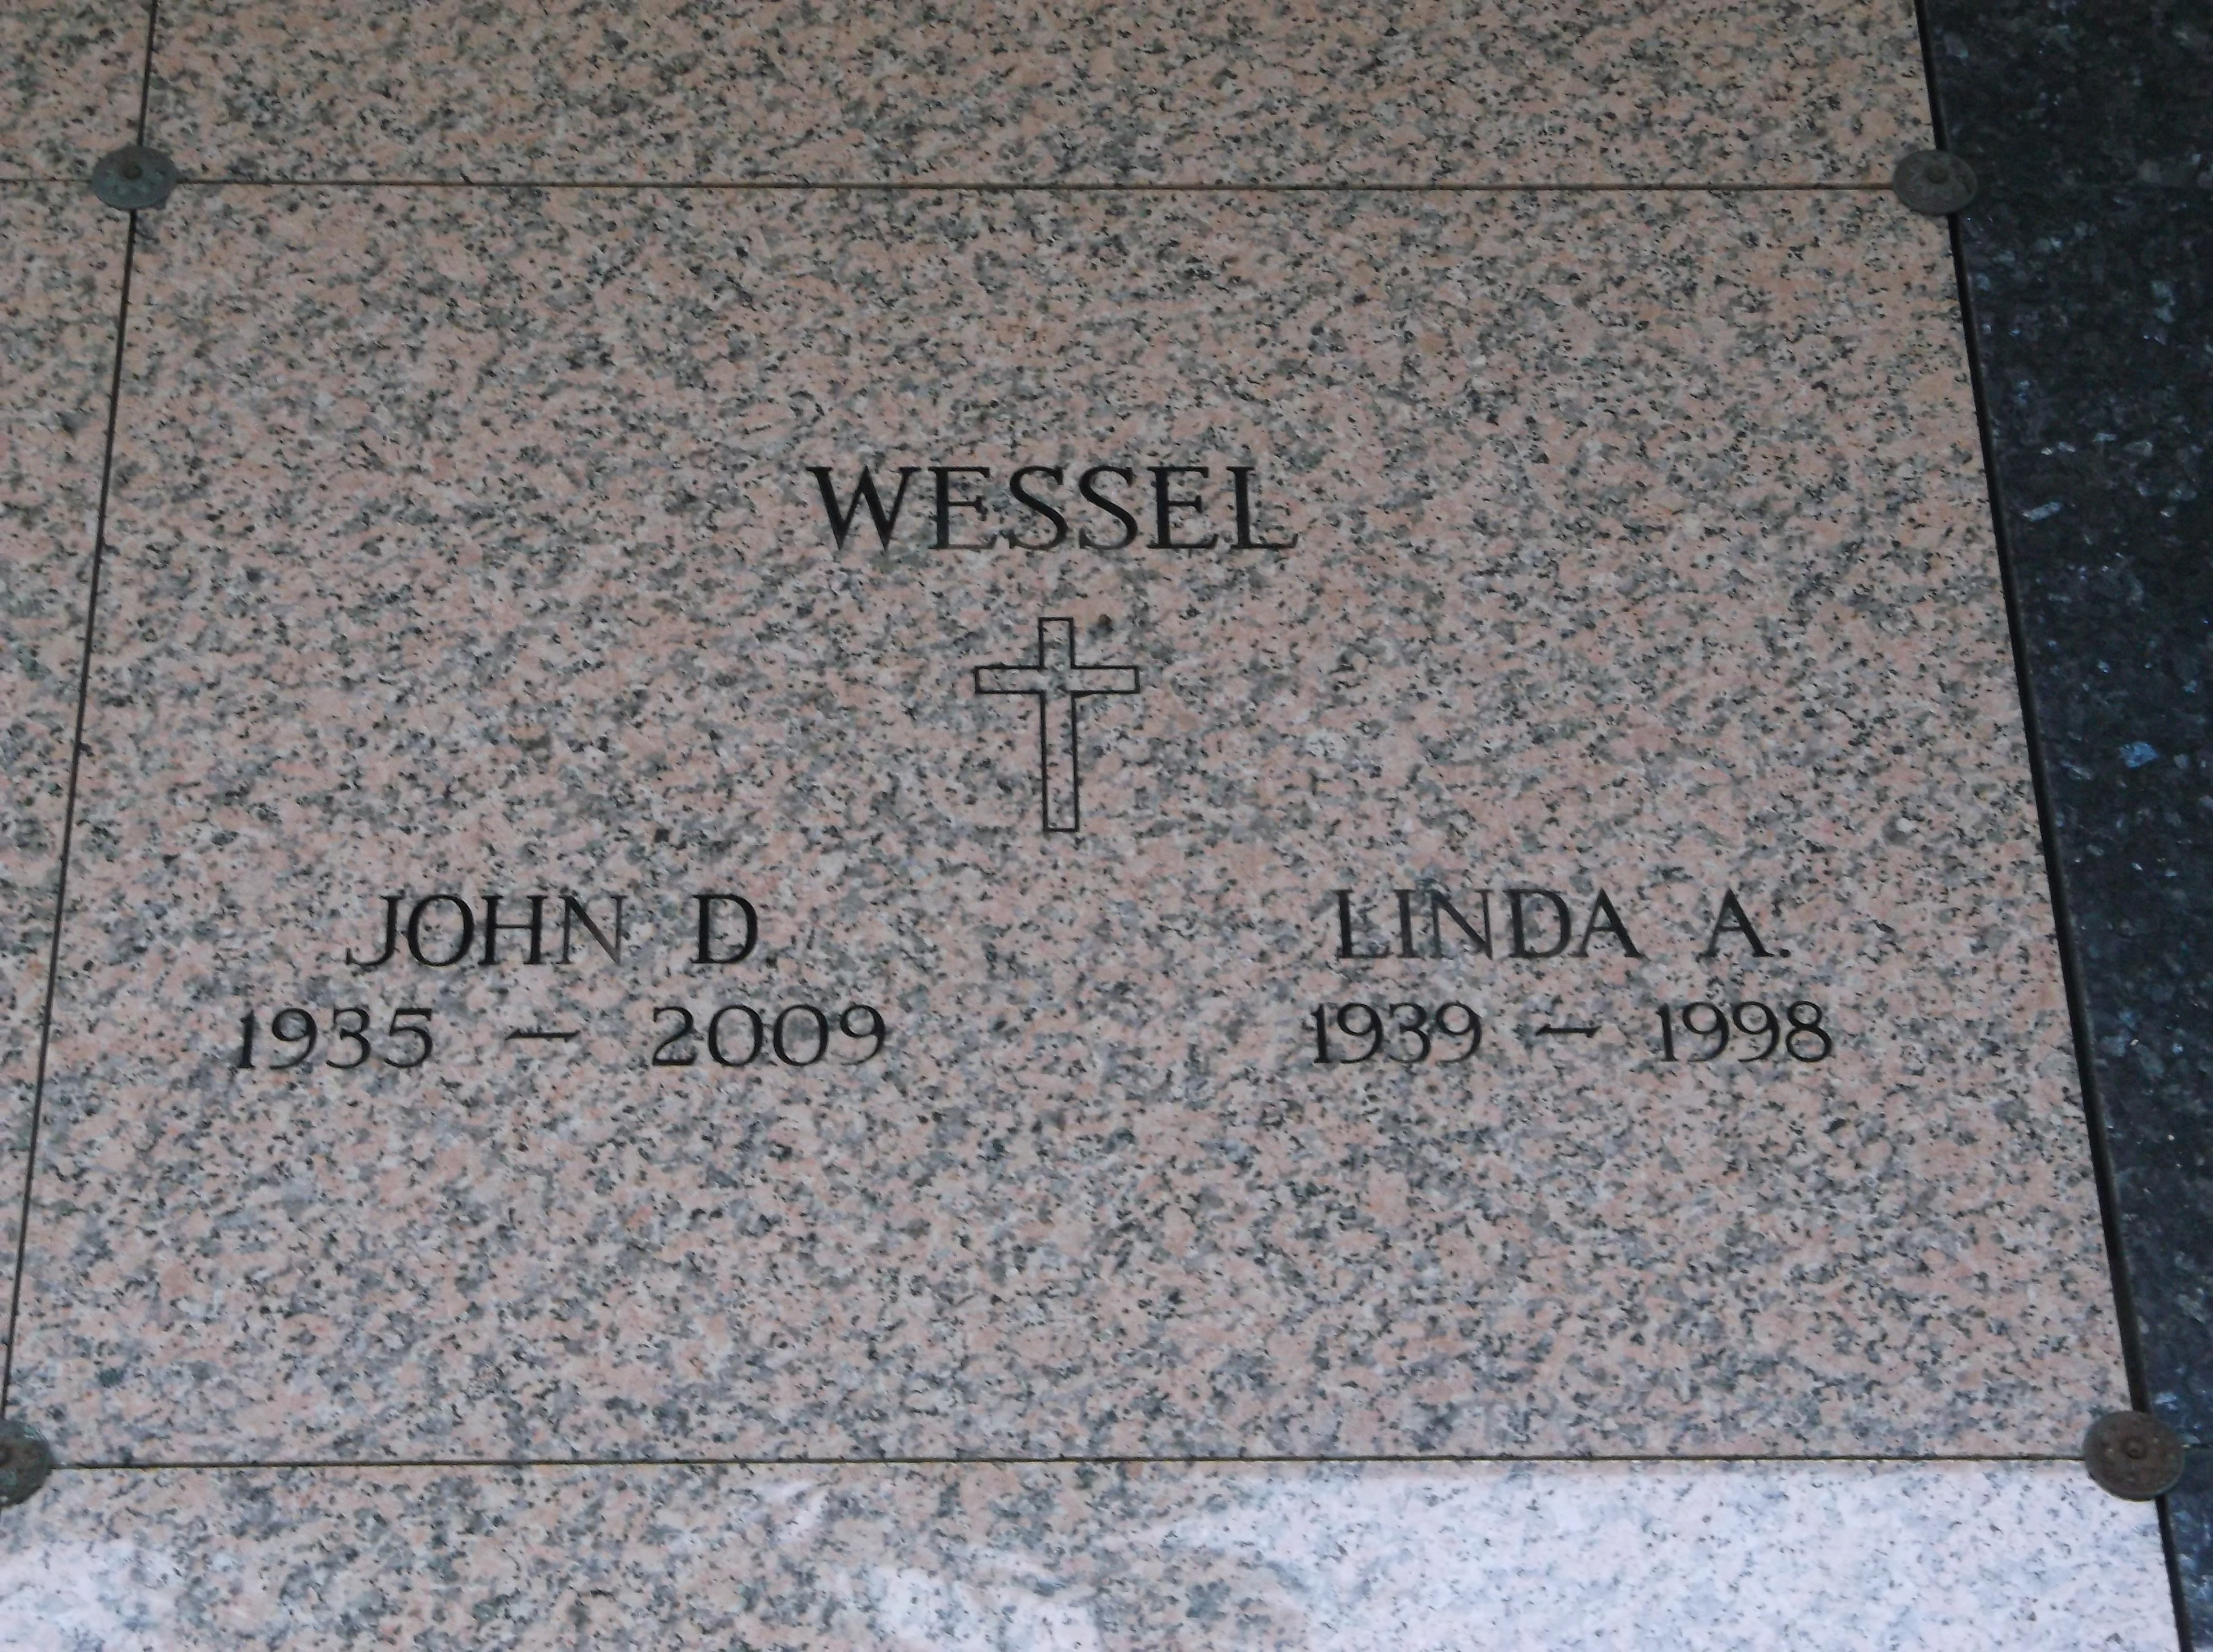 John D Wessel